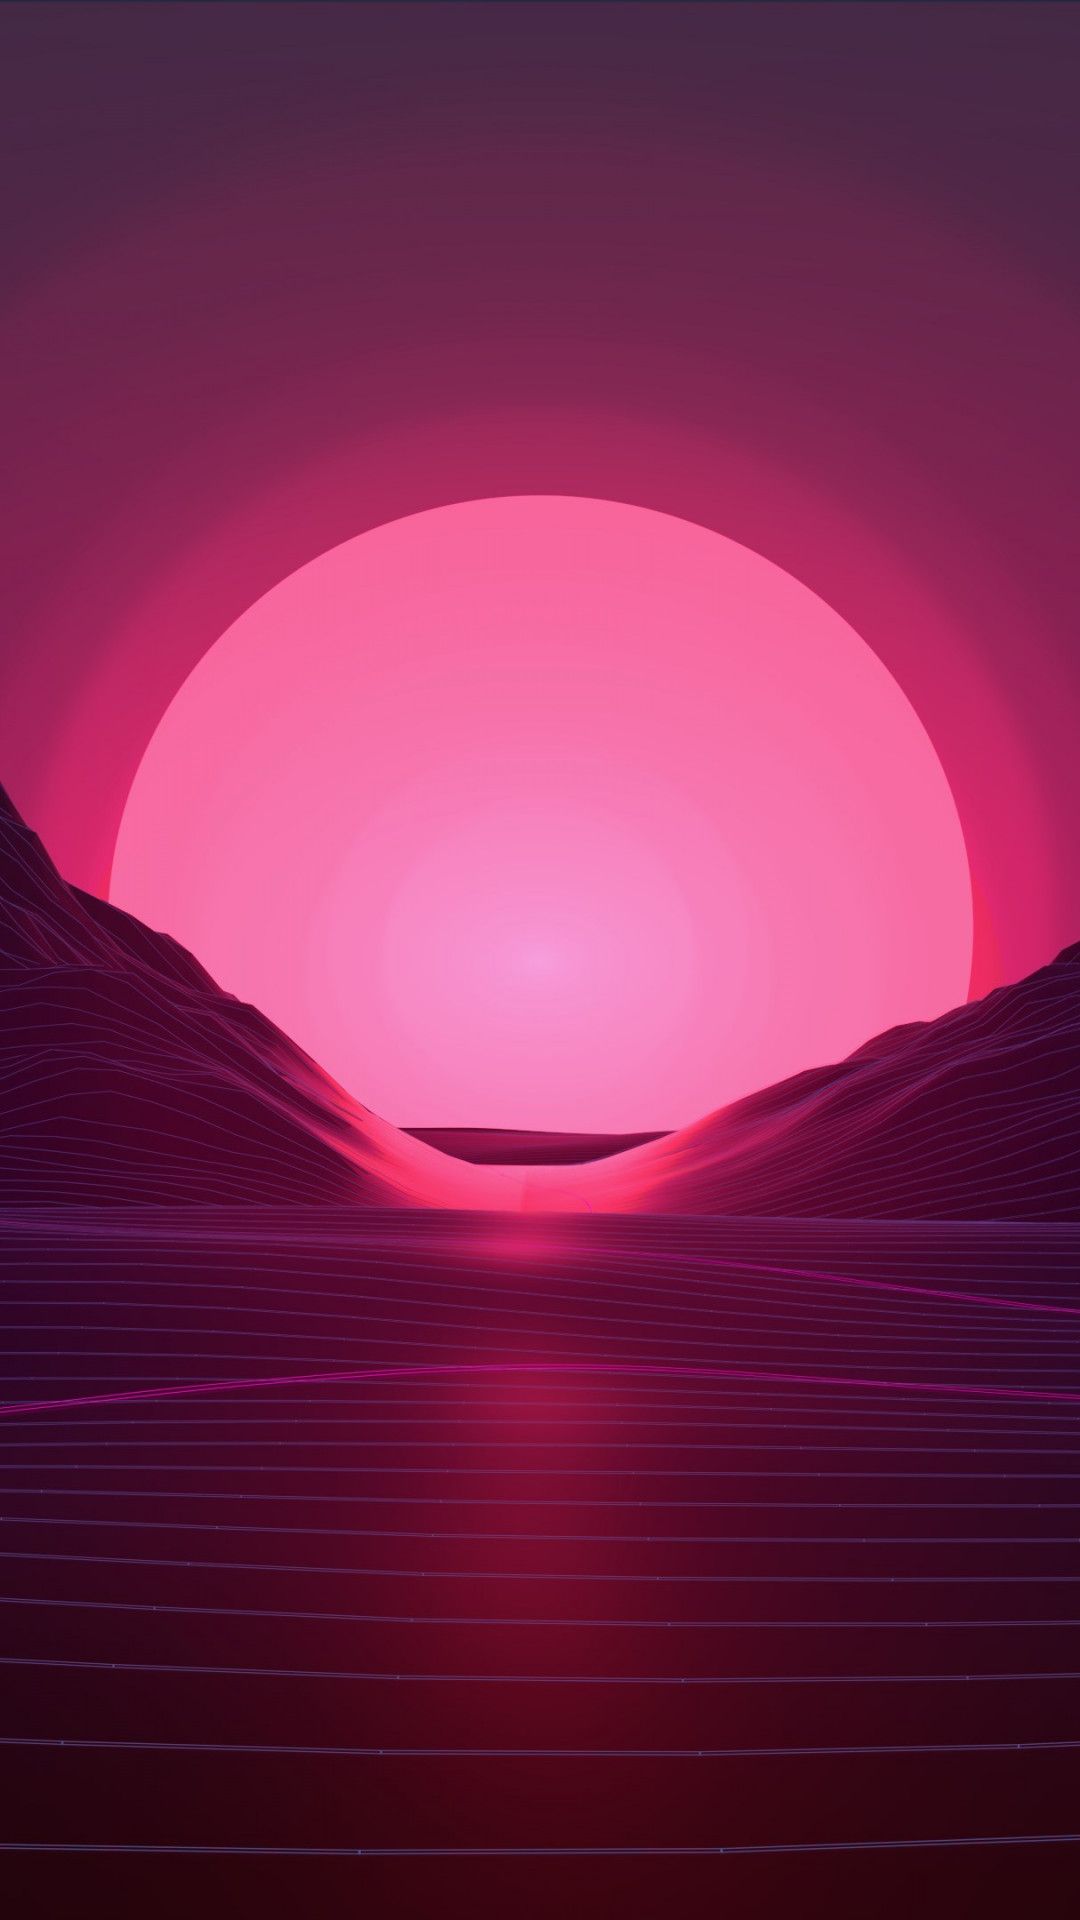 Download wallpaper: Neon sunset 1080x1920